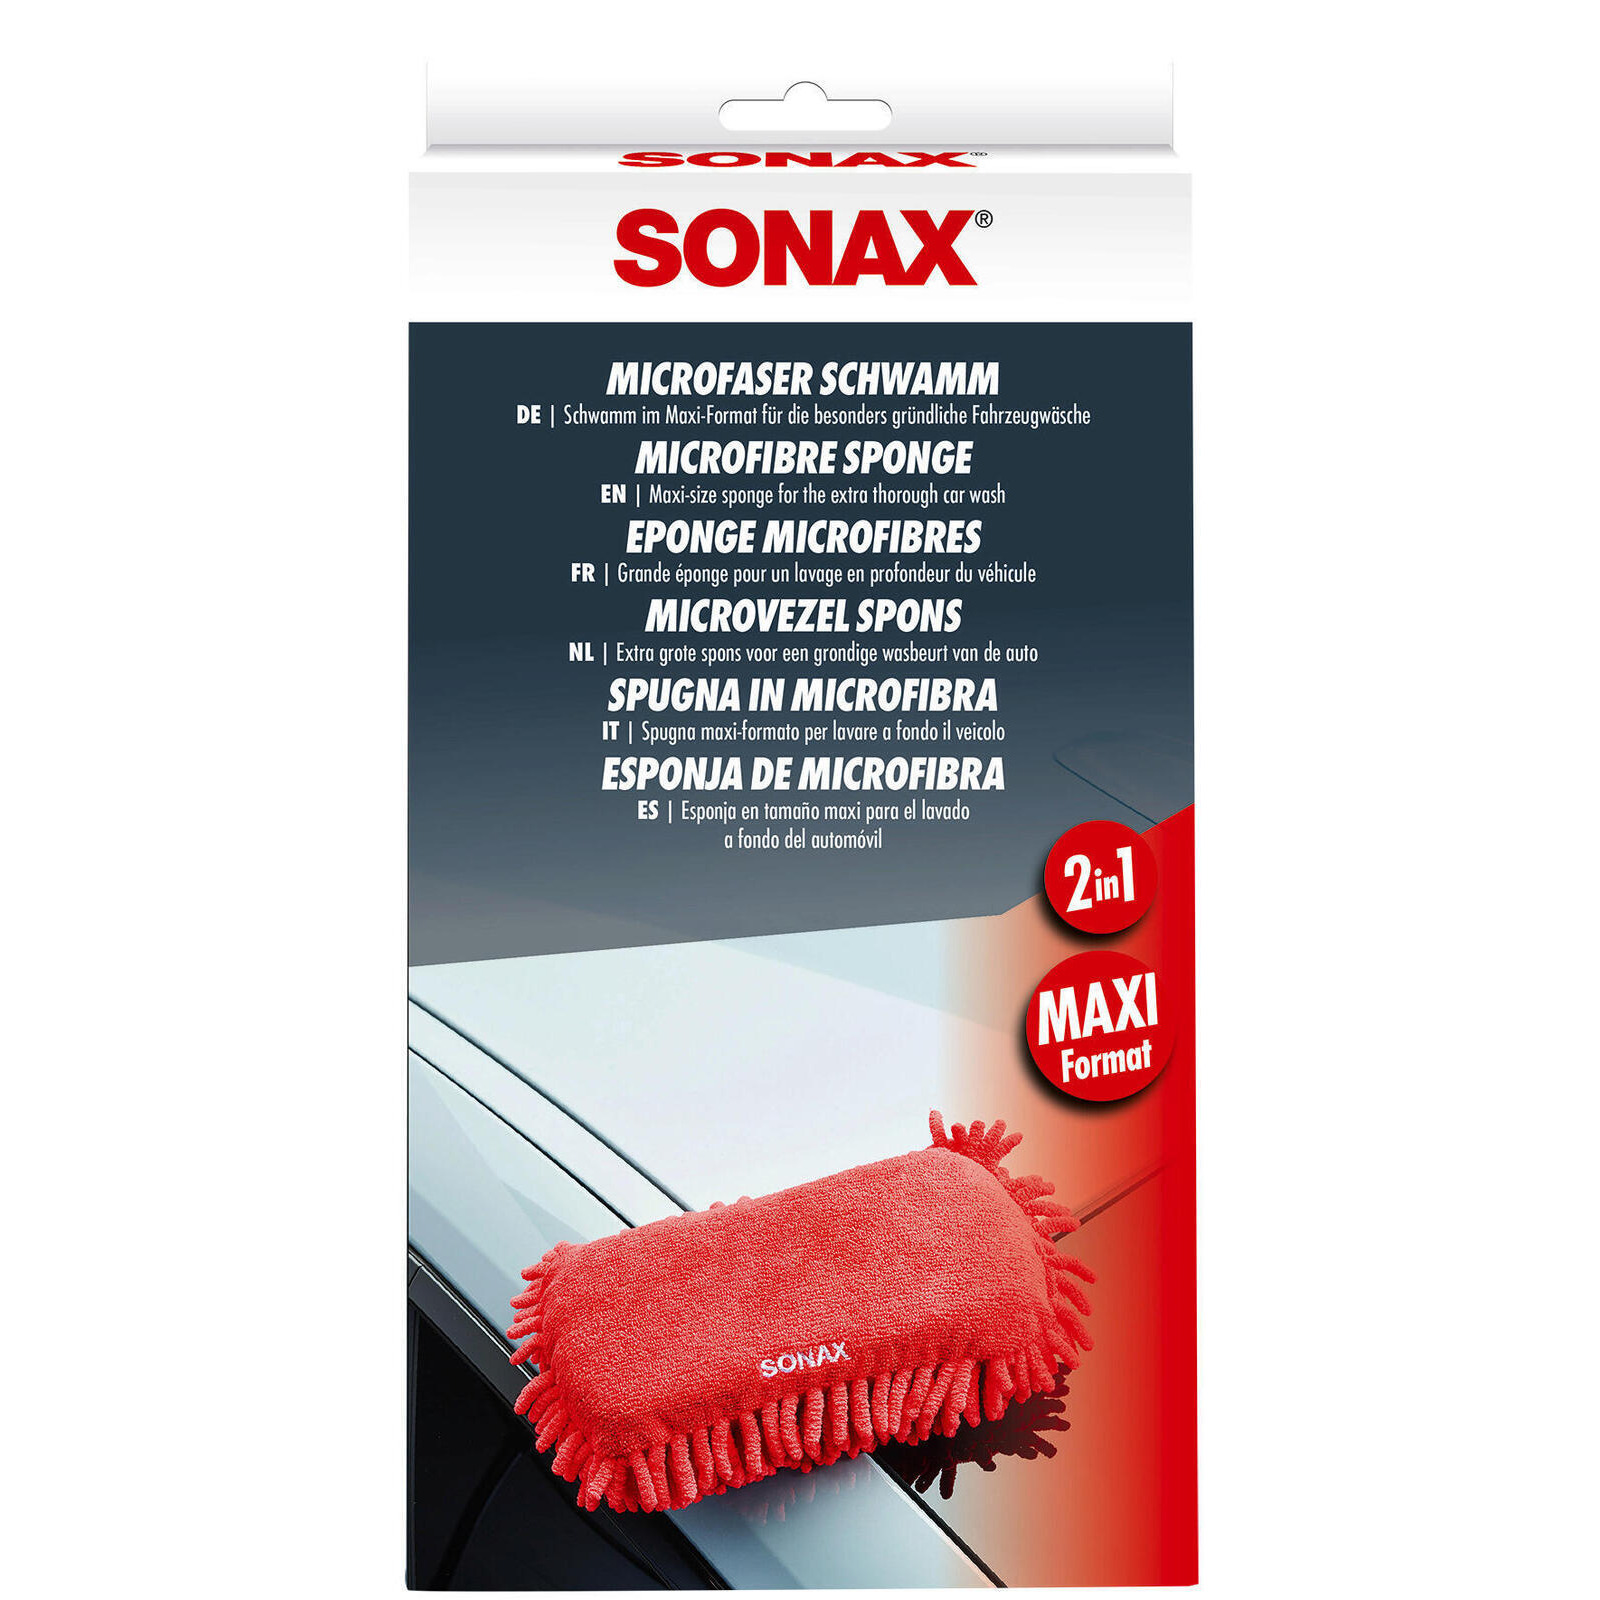 SONAX Sponge Microfibre sponge